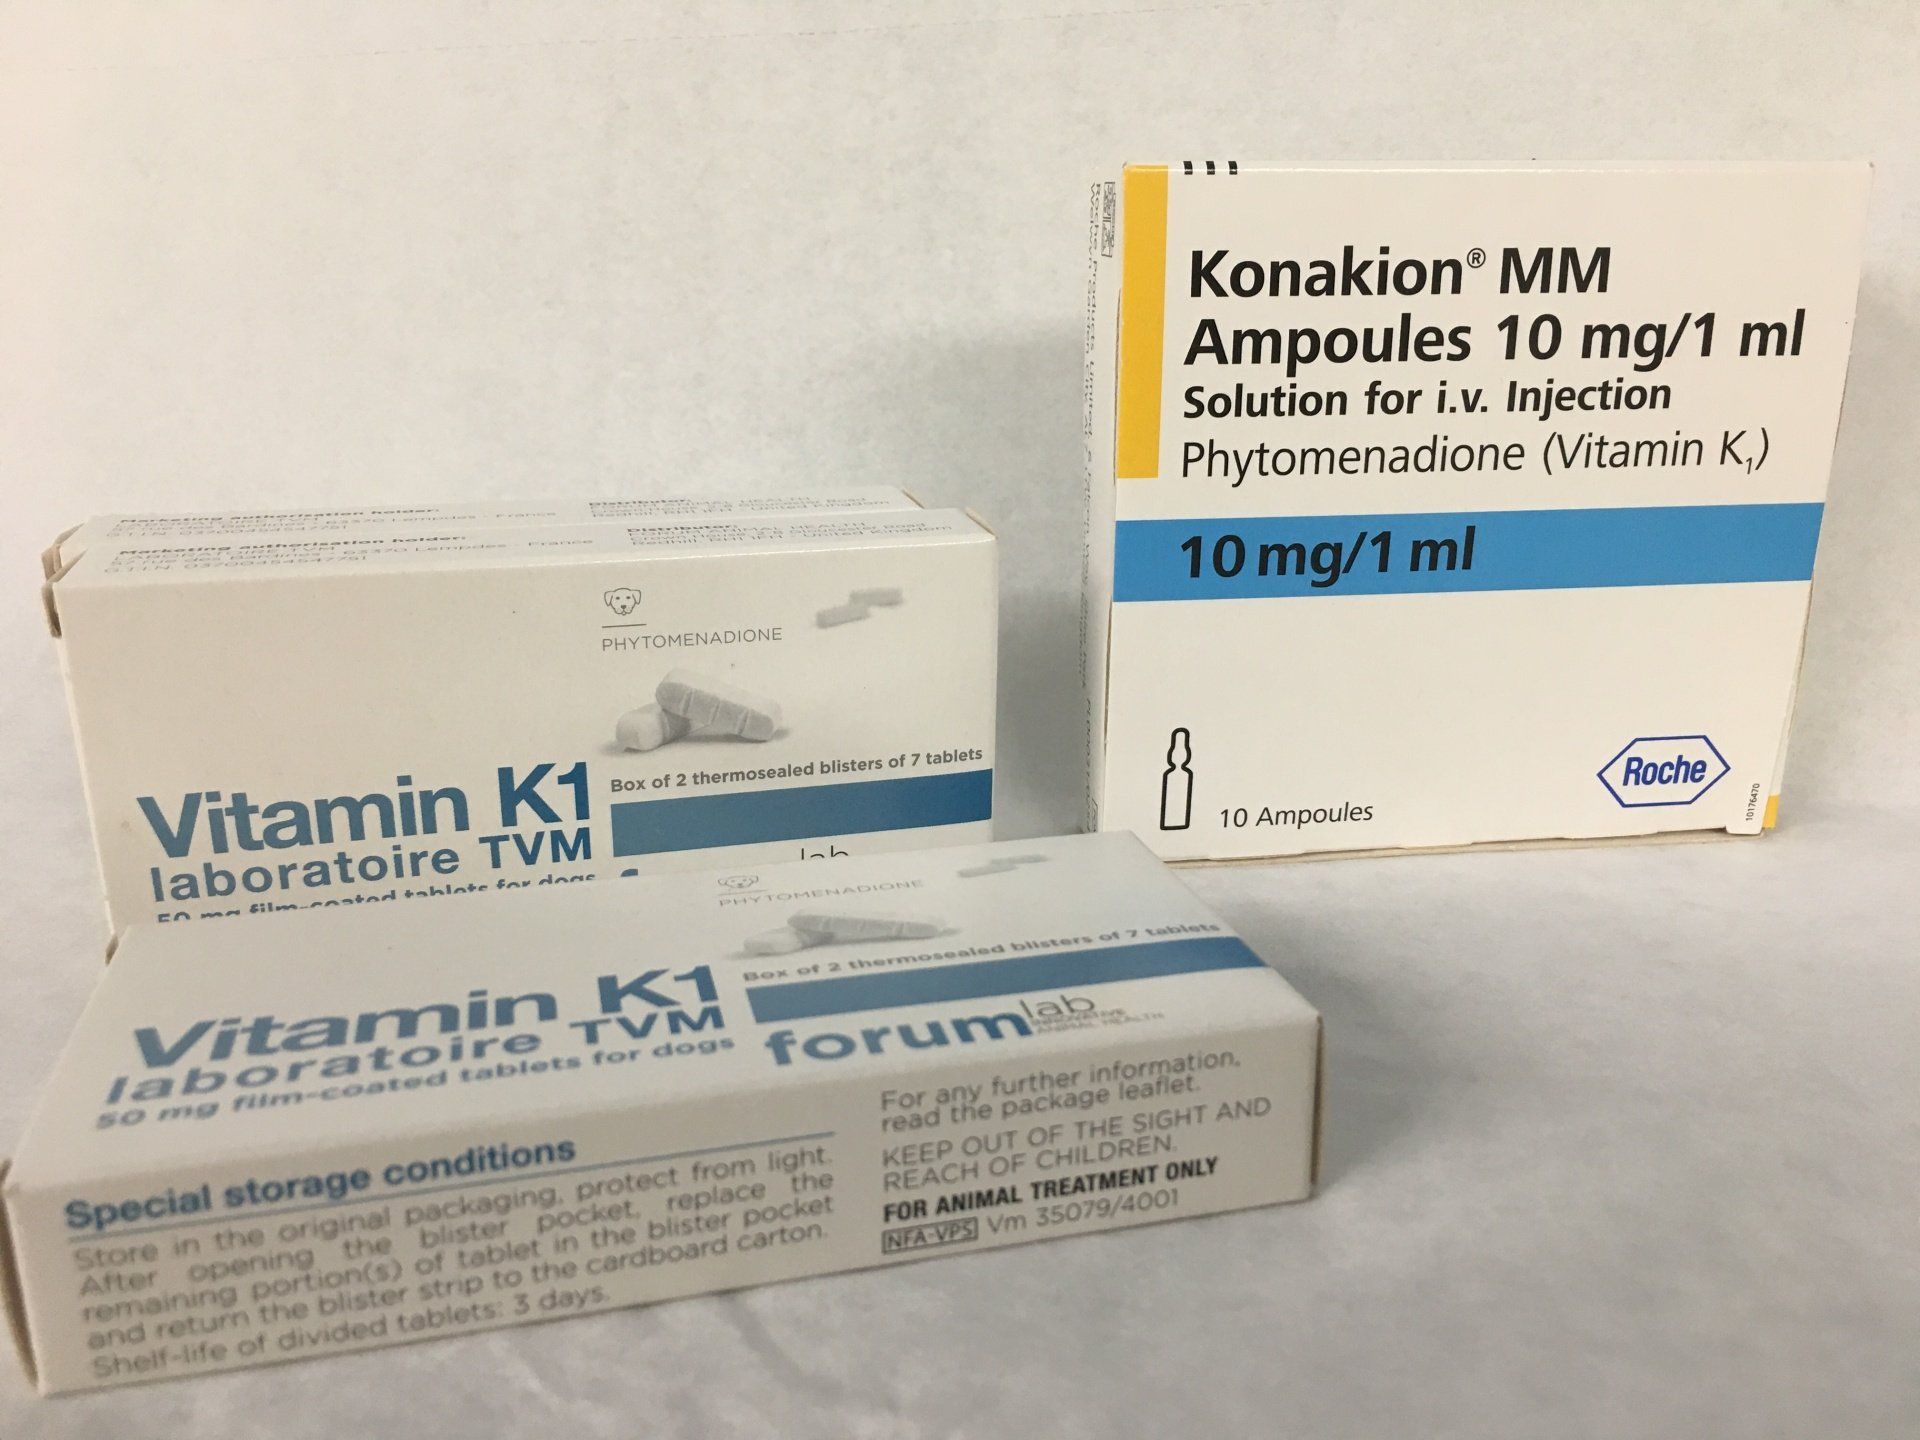 Vitamin K is used to treat Rat Bait Poisoning